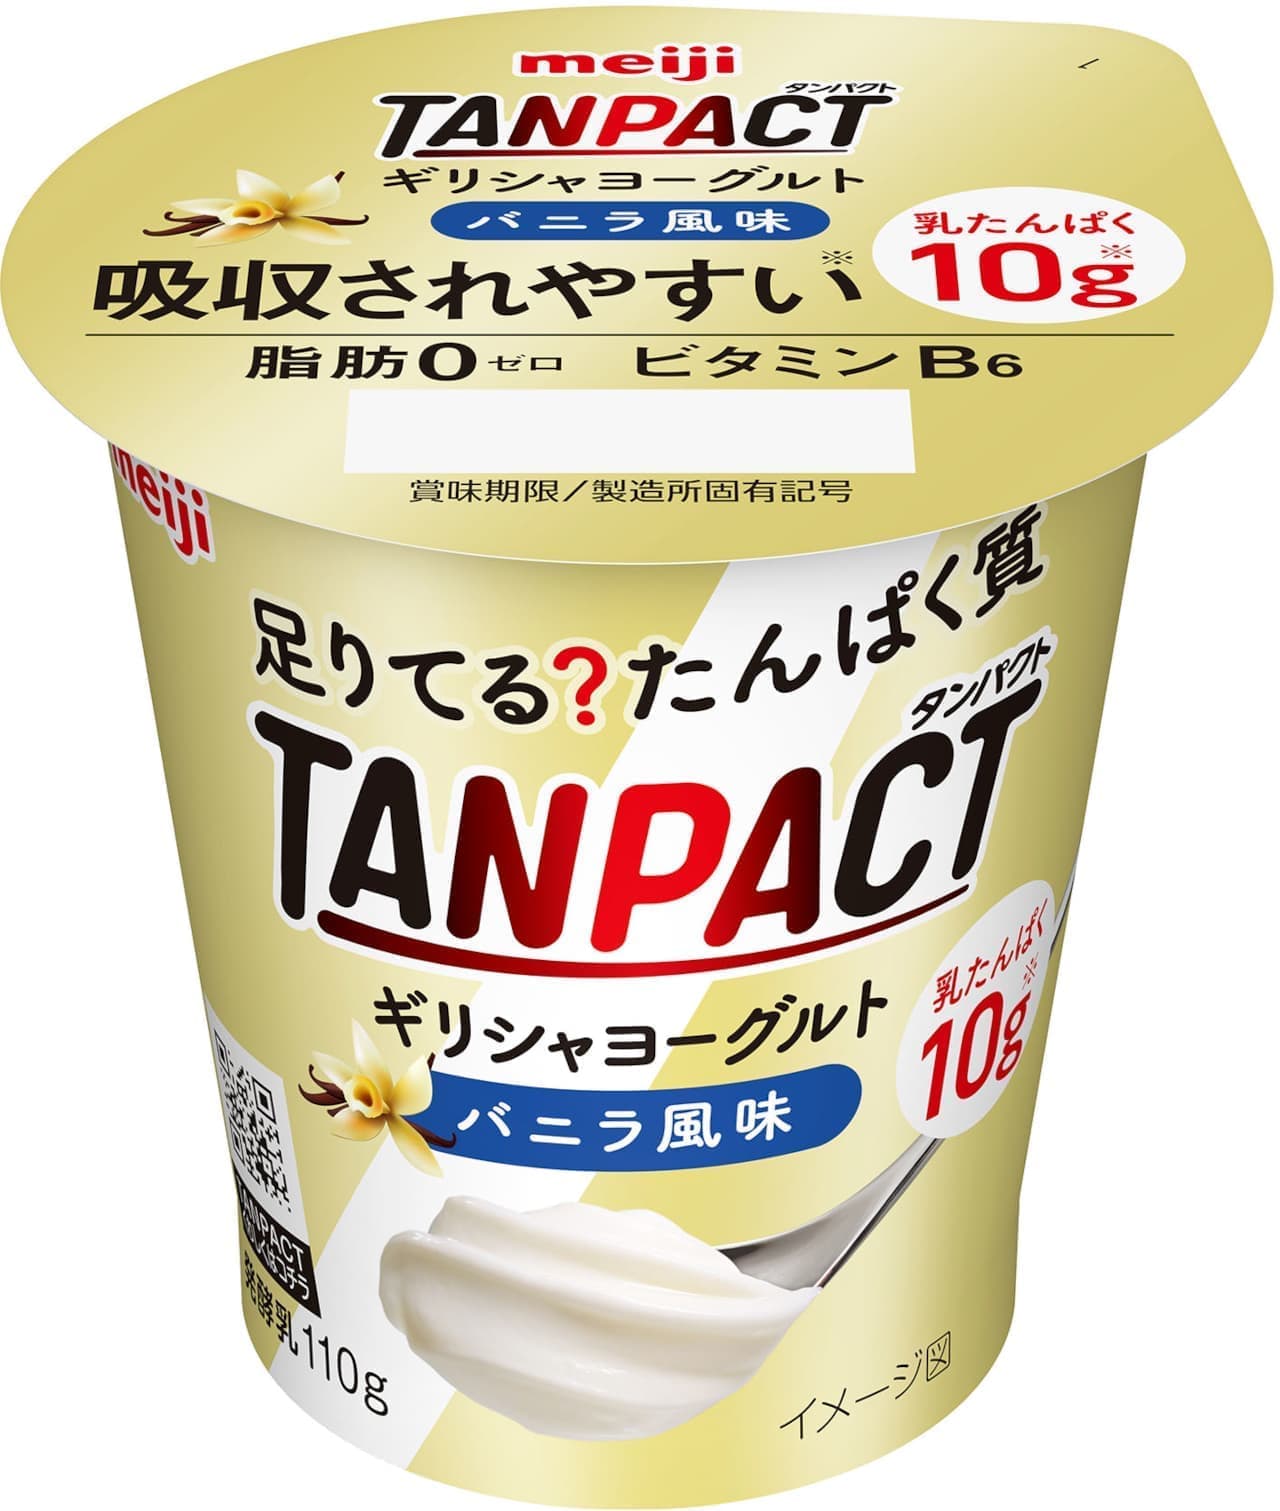 Meiji "Meiji TANPACT Greek yogurt vanilla flavor"